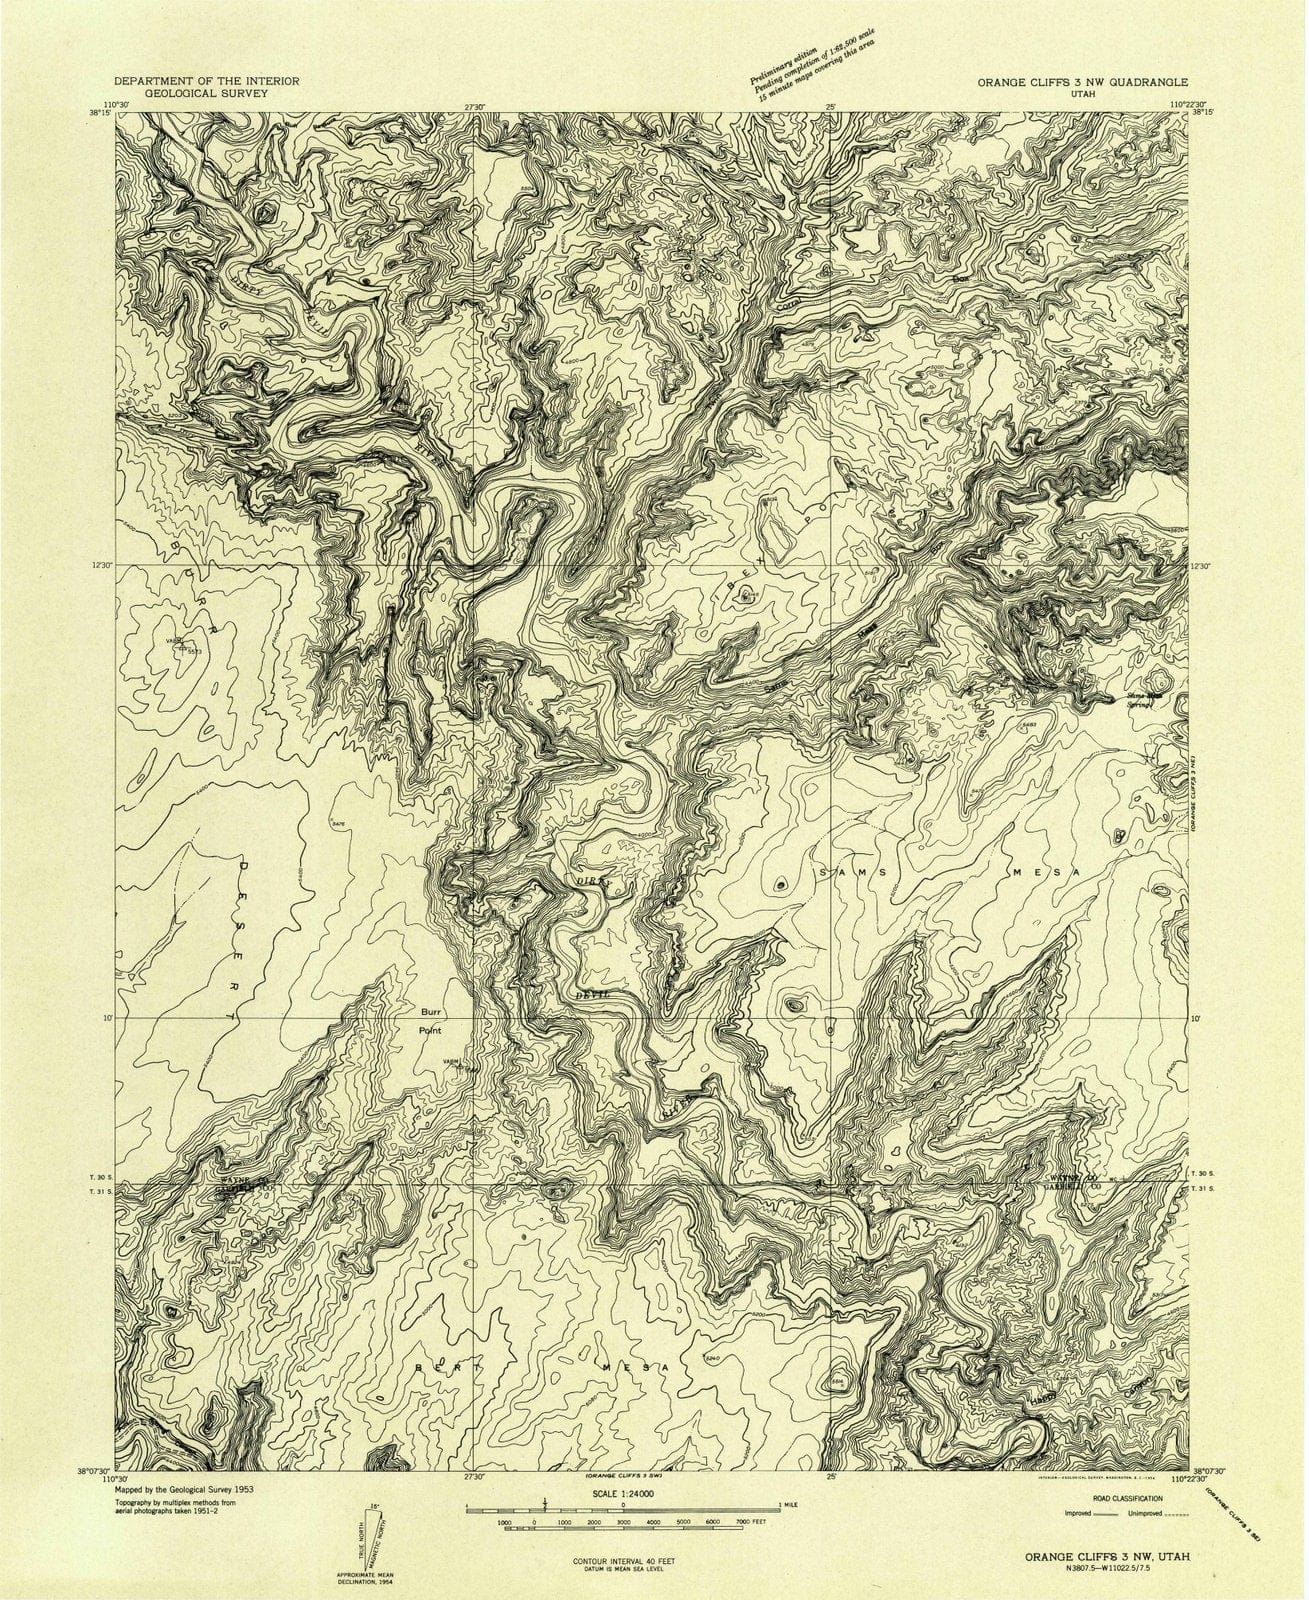 1953 Orange Cliffs 3, UT - Utah - USGS Topographic Map v2